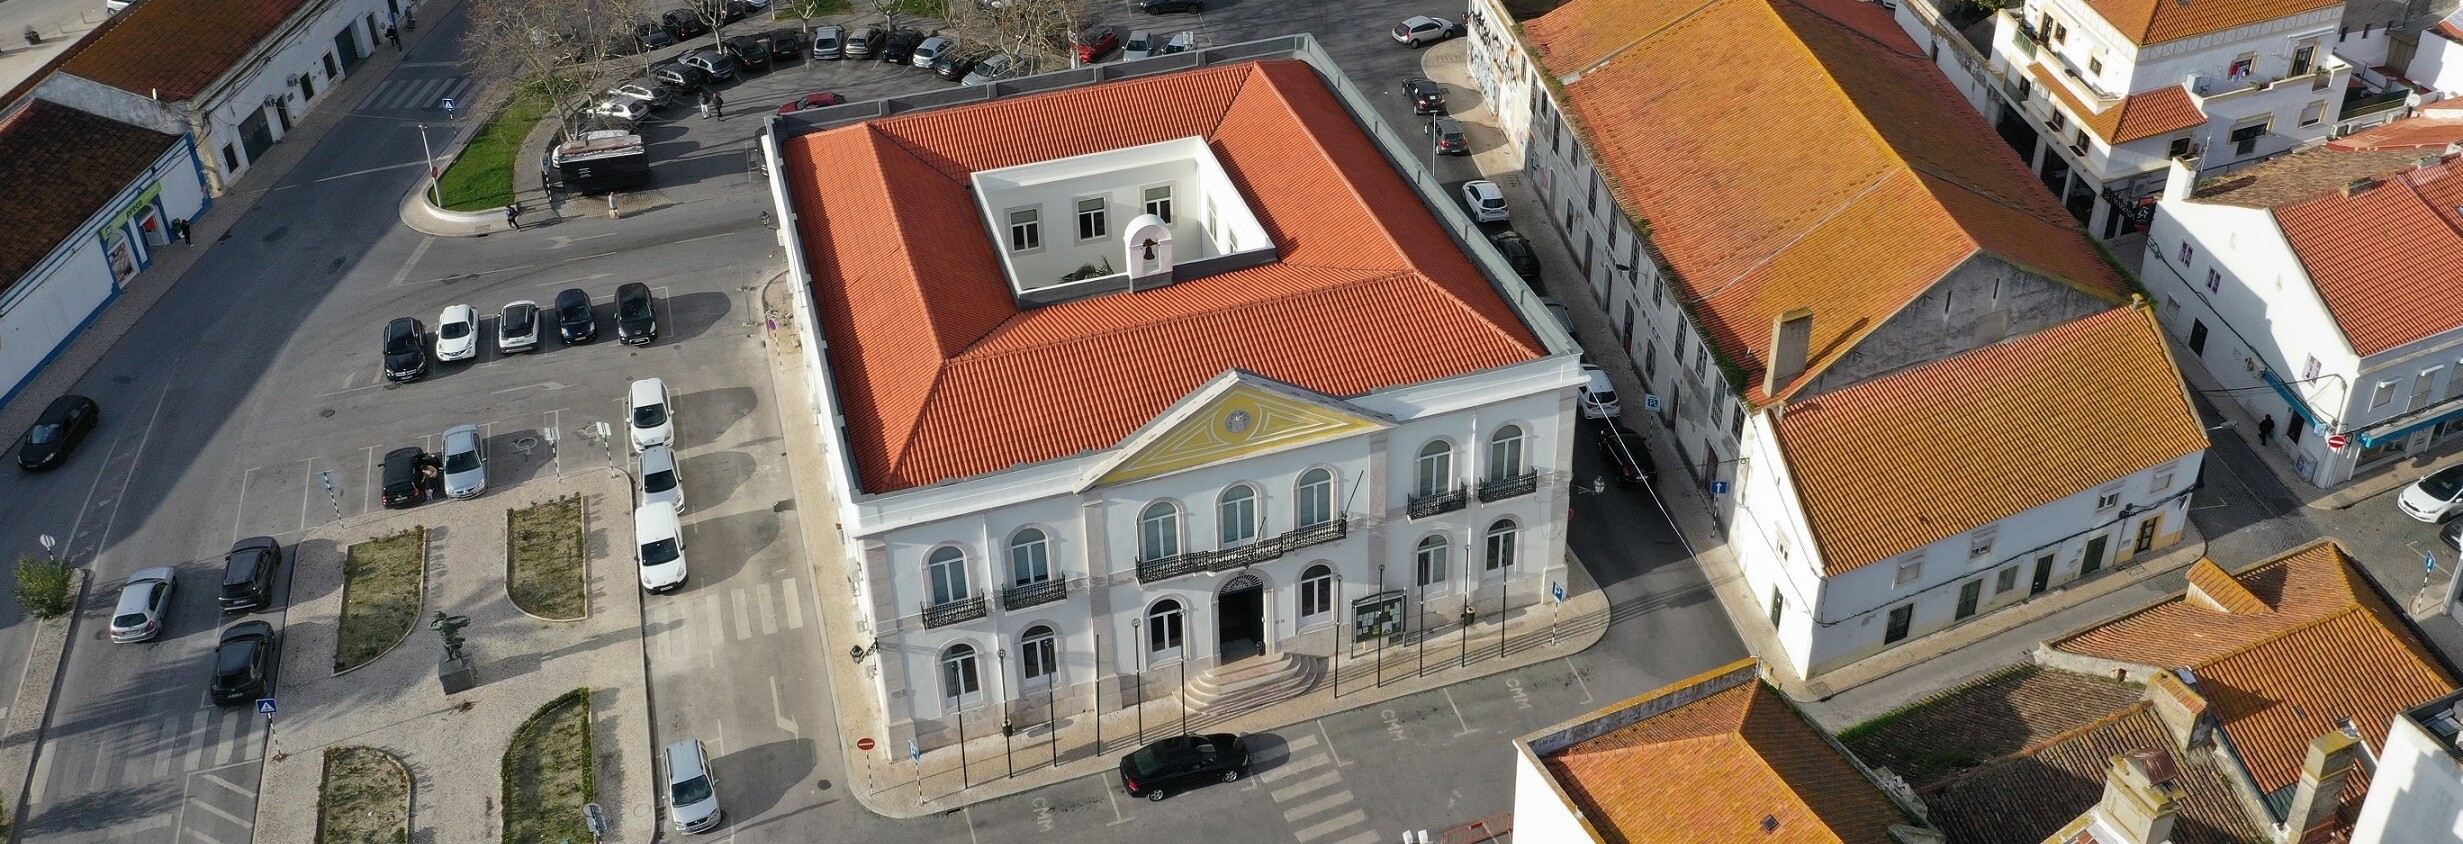 Câmara Municipal do Montijo apoia eventos desportivos e culturais